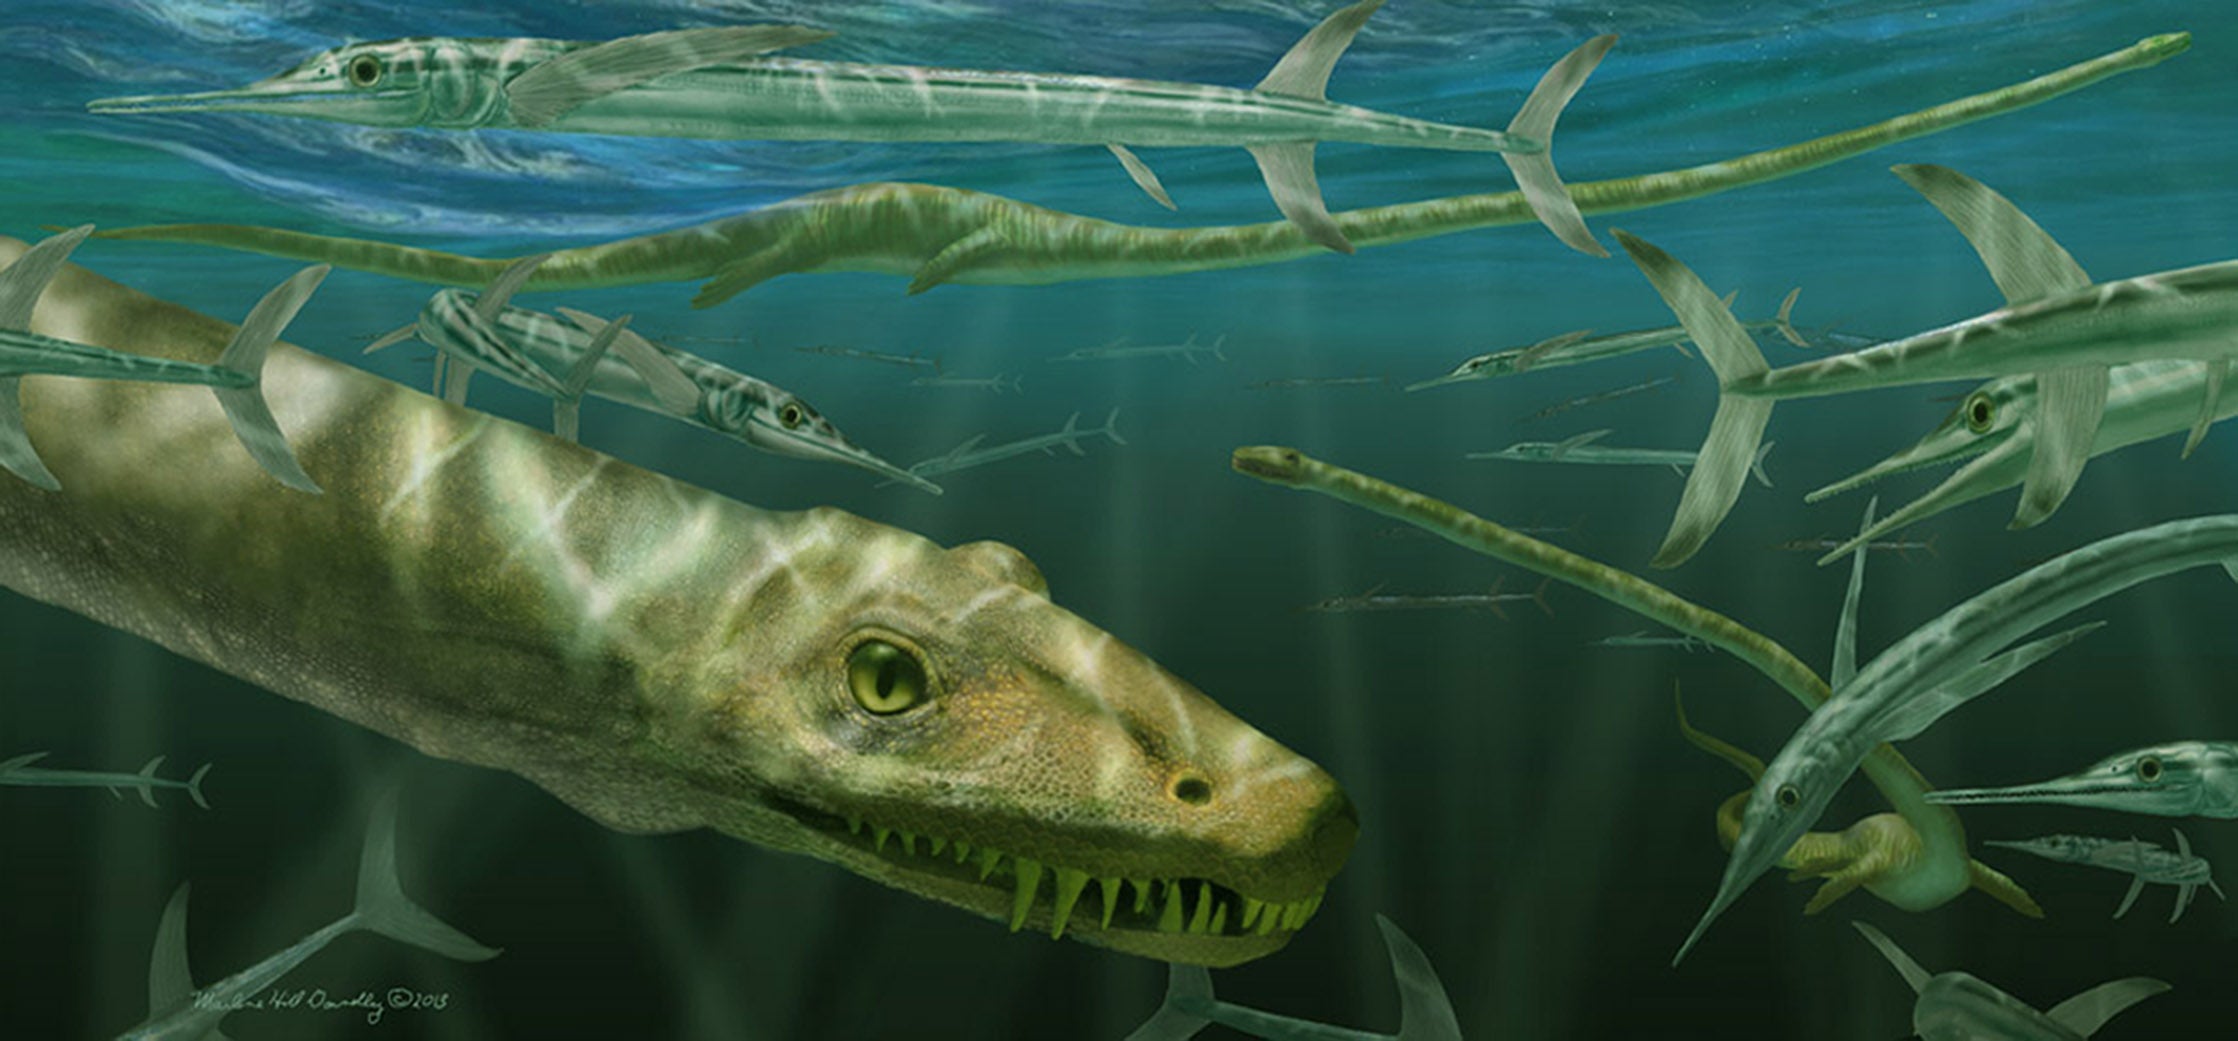 An artist impression of a Dinocephalosaurus orientalis swimming alongside some prehistoric fish known as Saurichthys